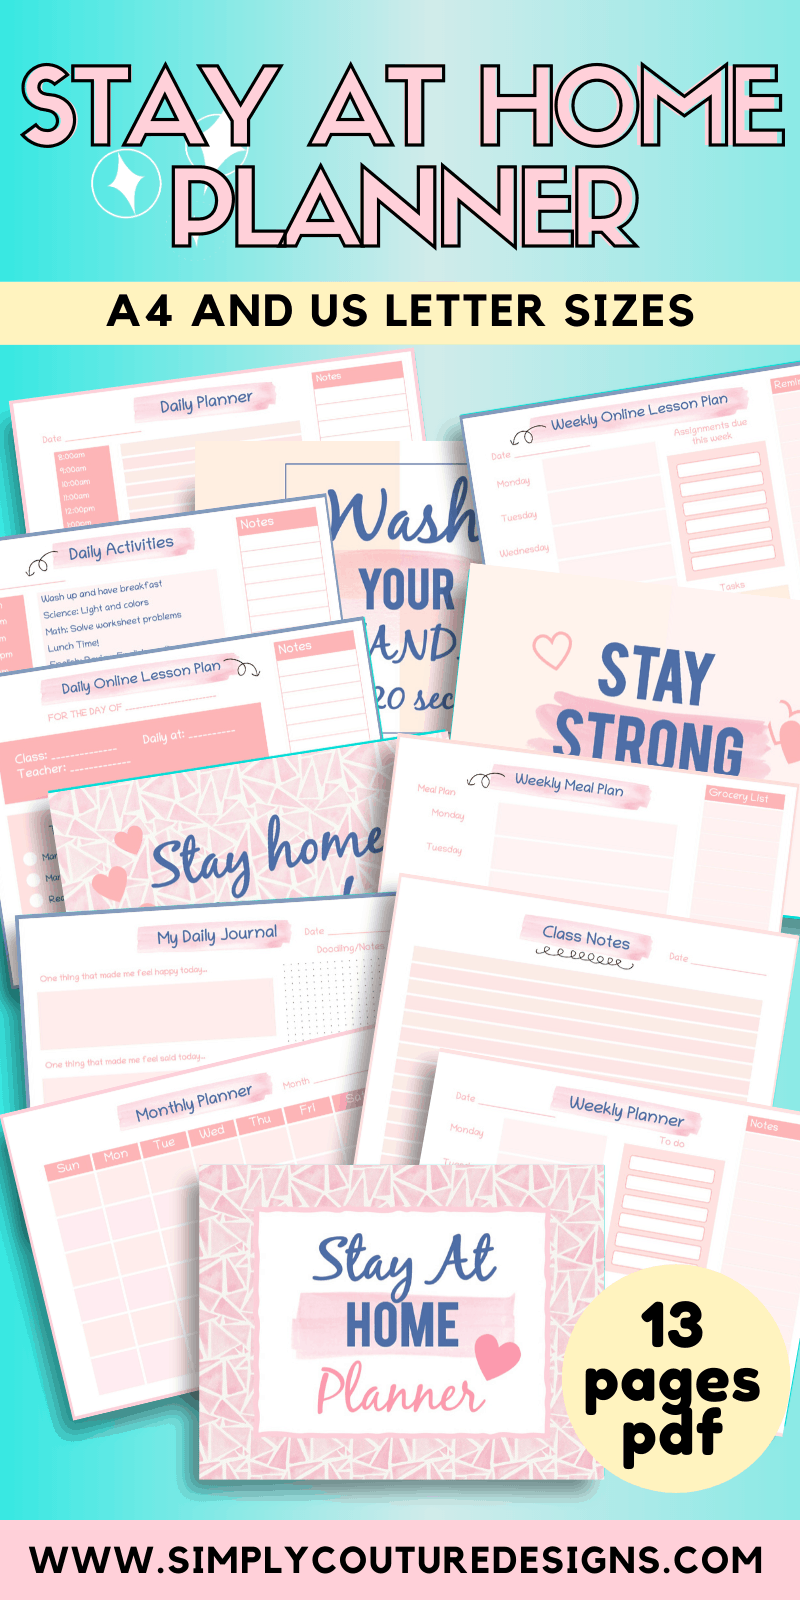 Stay At Home Planner Simply Couture Designs #staypositiveplanner #stayathomeplanner #journalprintable #plannerprintable